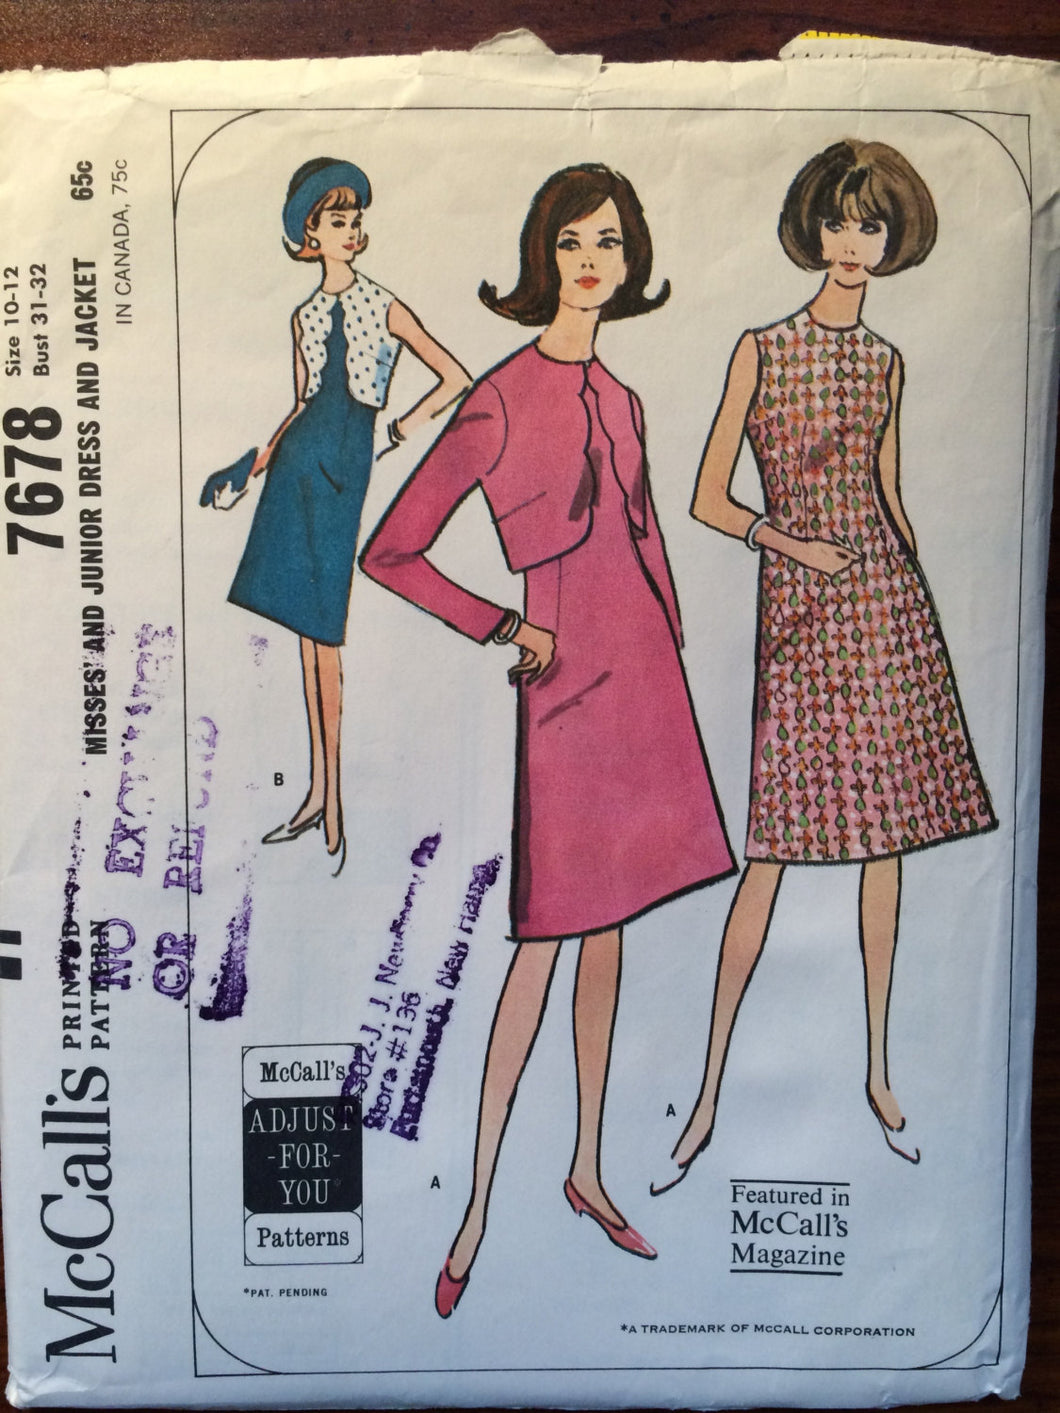 Vintage Sewing Pattern / 1960s Dress Pattern / Jacket Pattern / McCall's 7678 / Size 10-12 Bust 31-32 / Scalloped Front Jacket / Shift Dress